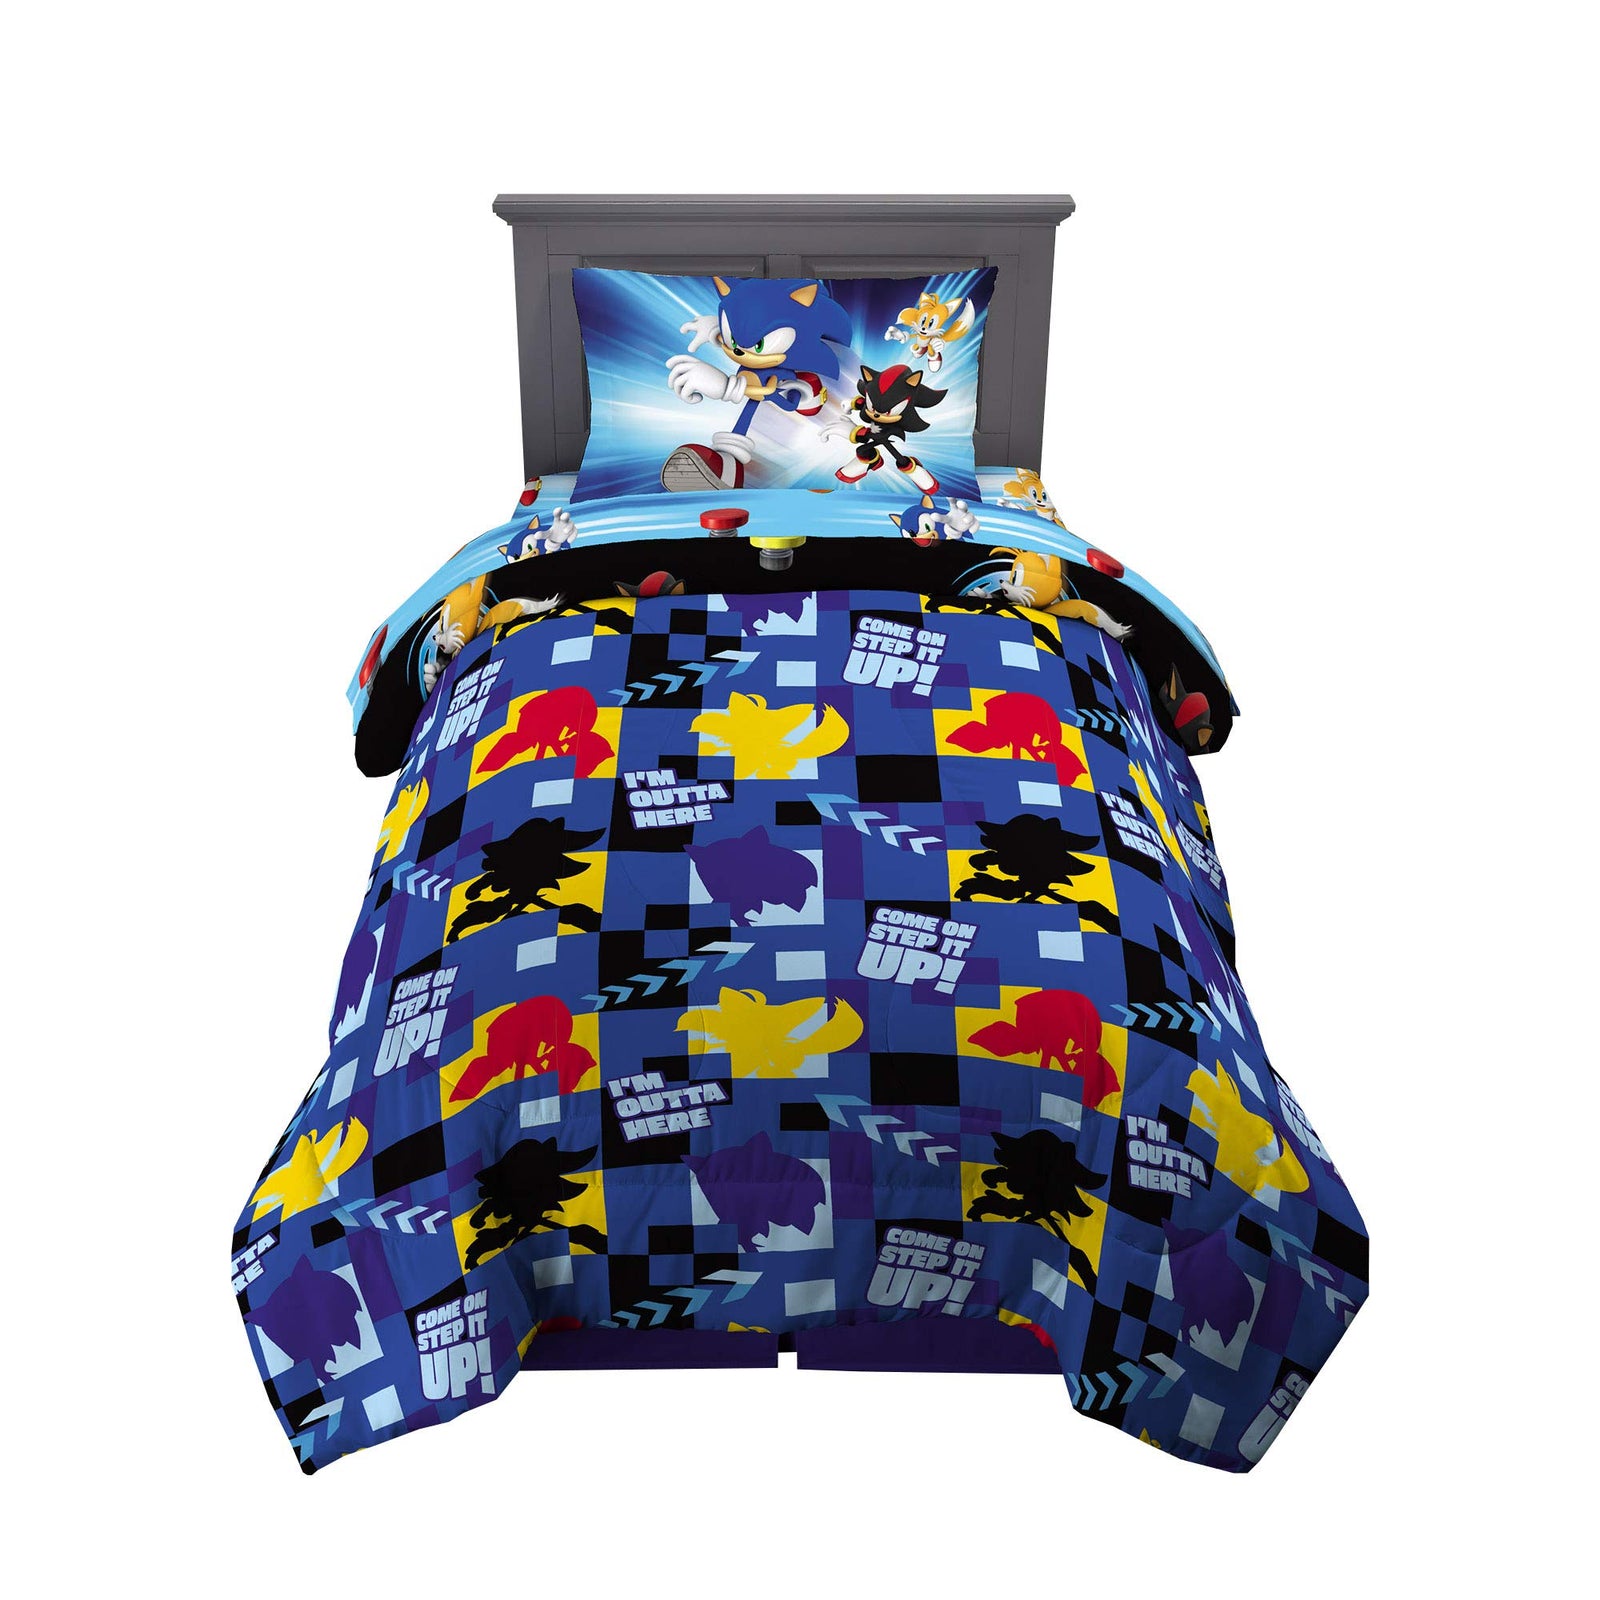 Franco Kids Bedding Super Soft Microfiber Comforter and Sheet Set, 4 Piece Twin Size, Sonic The Hedgehog